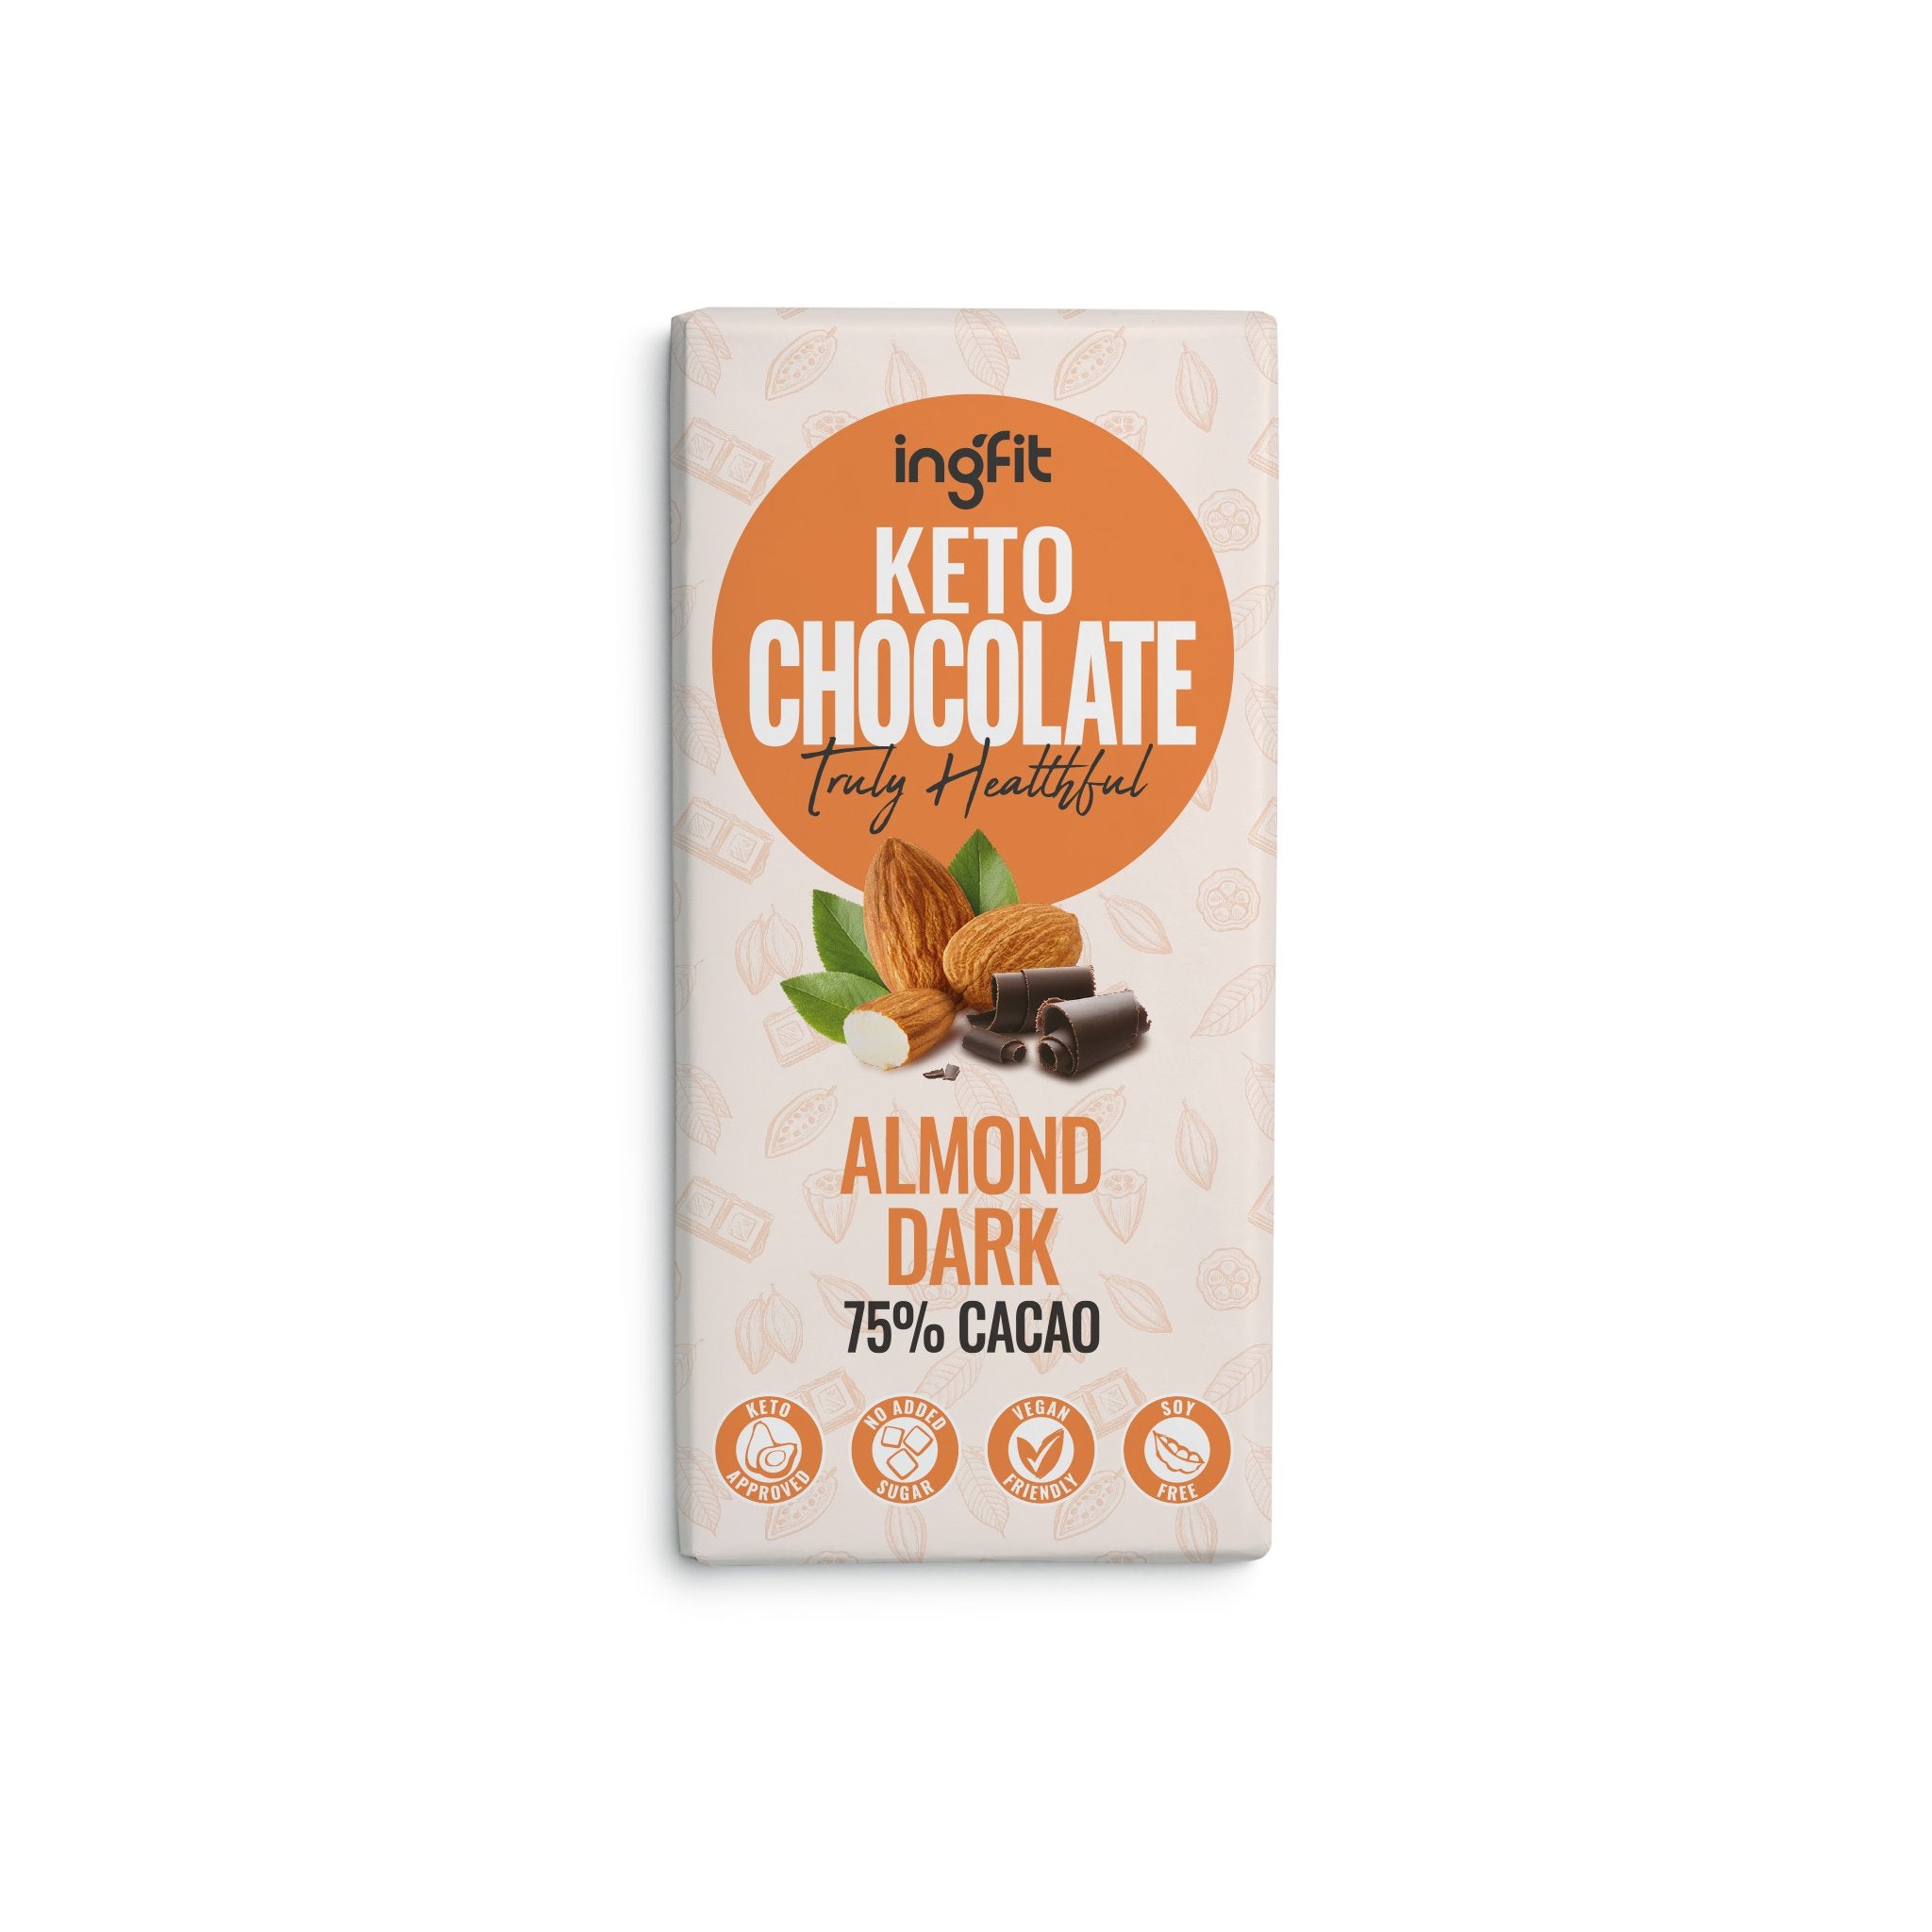 INGFIT Keto Dark Chocolate With Almonds, 95g